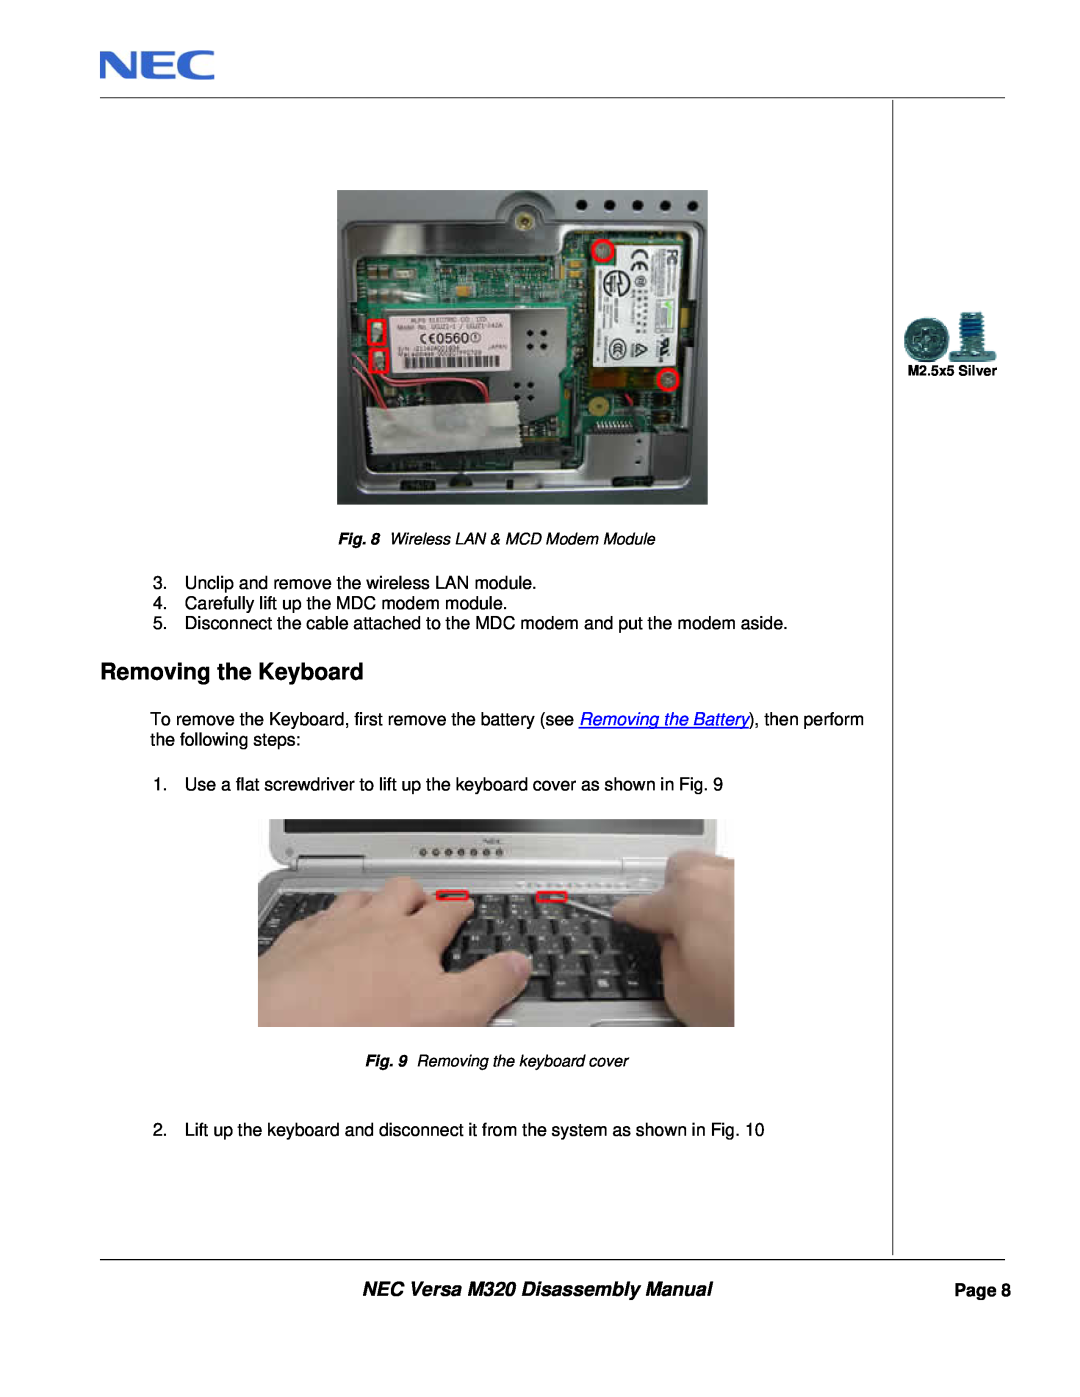 NEC manual Removing the Keyboard, NEC Versa M320 Disassembly Manual 